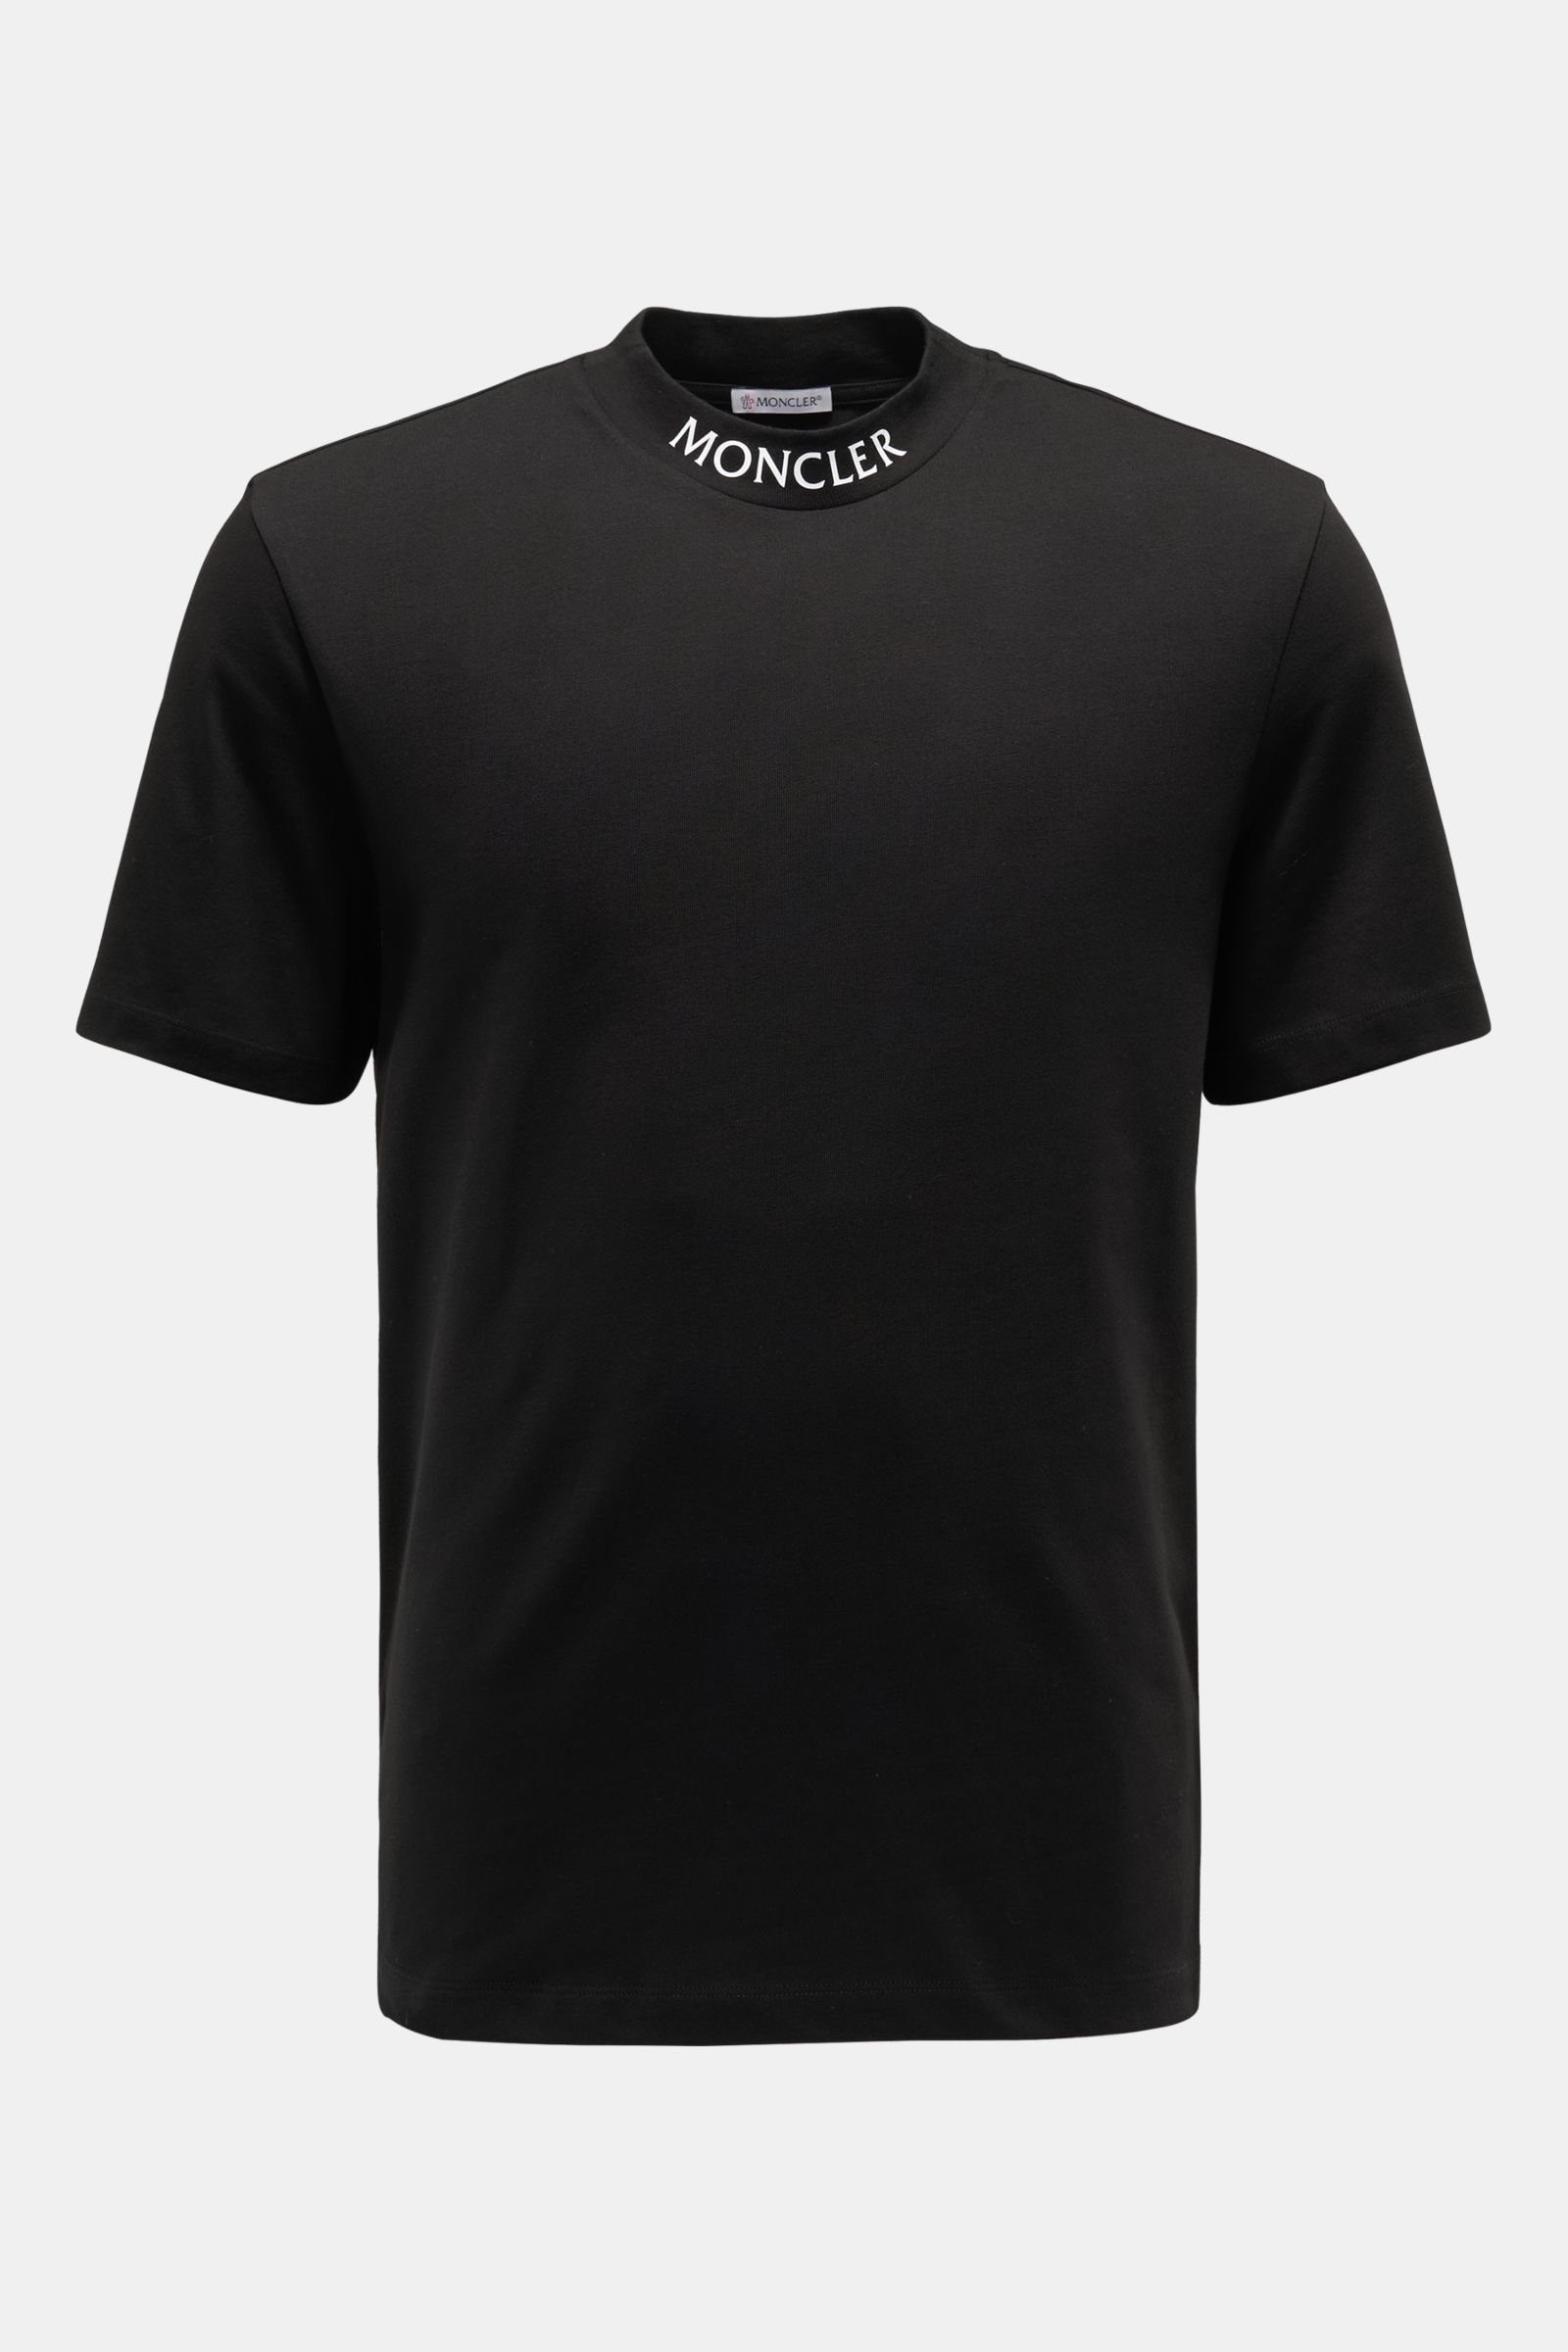 Crew neck T-shirt black 